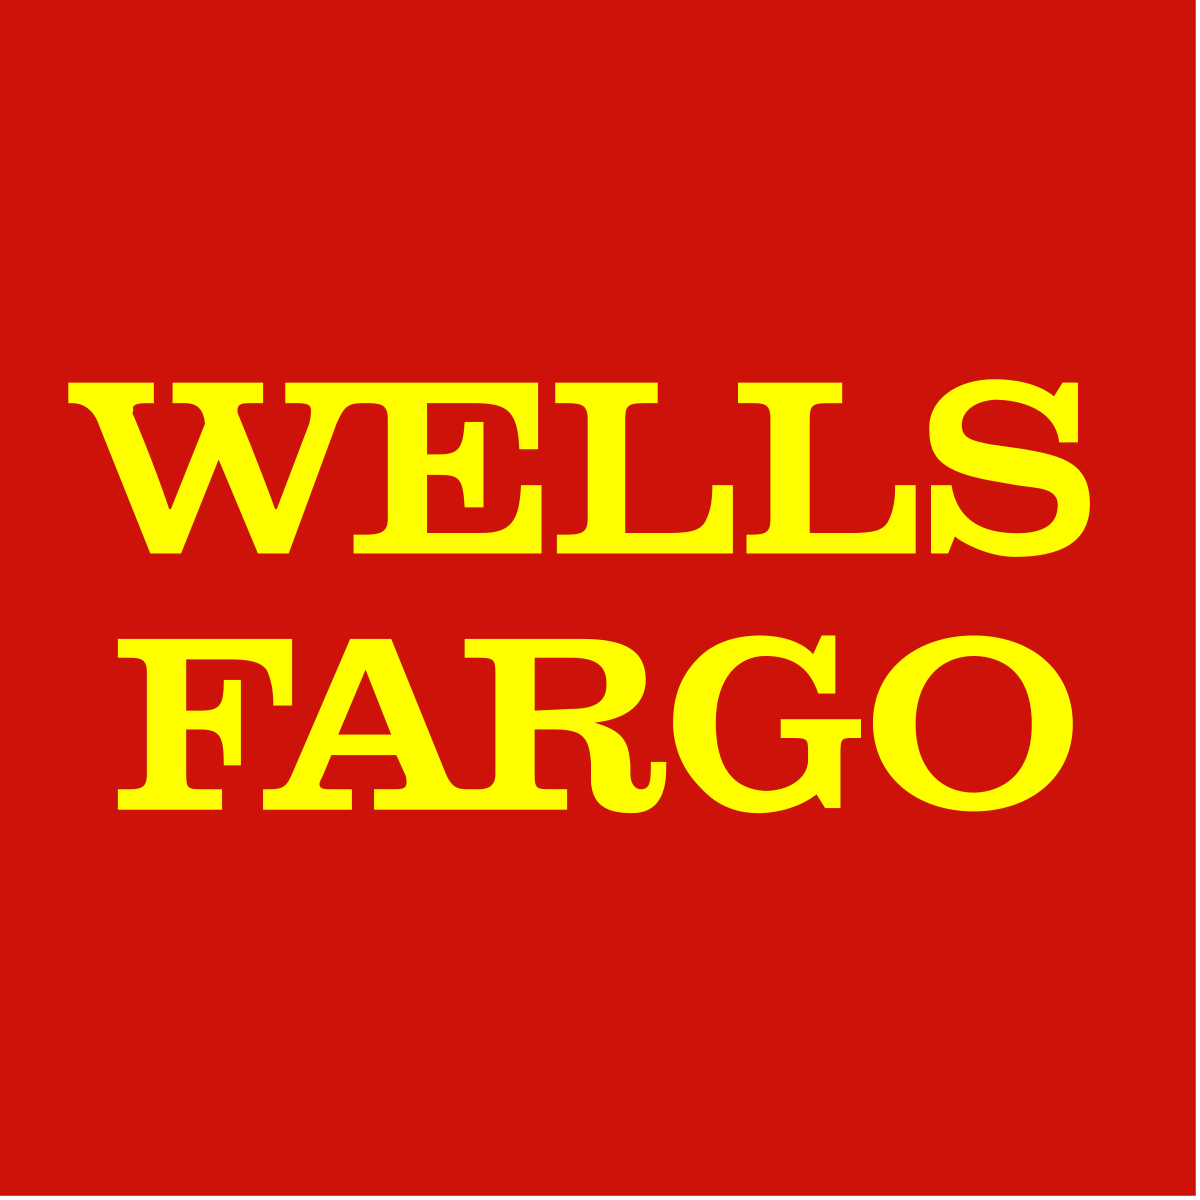 Wells Fargo Company